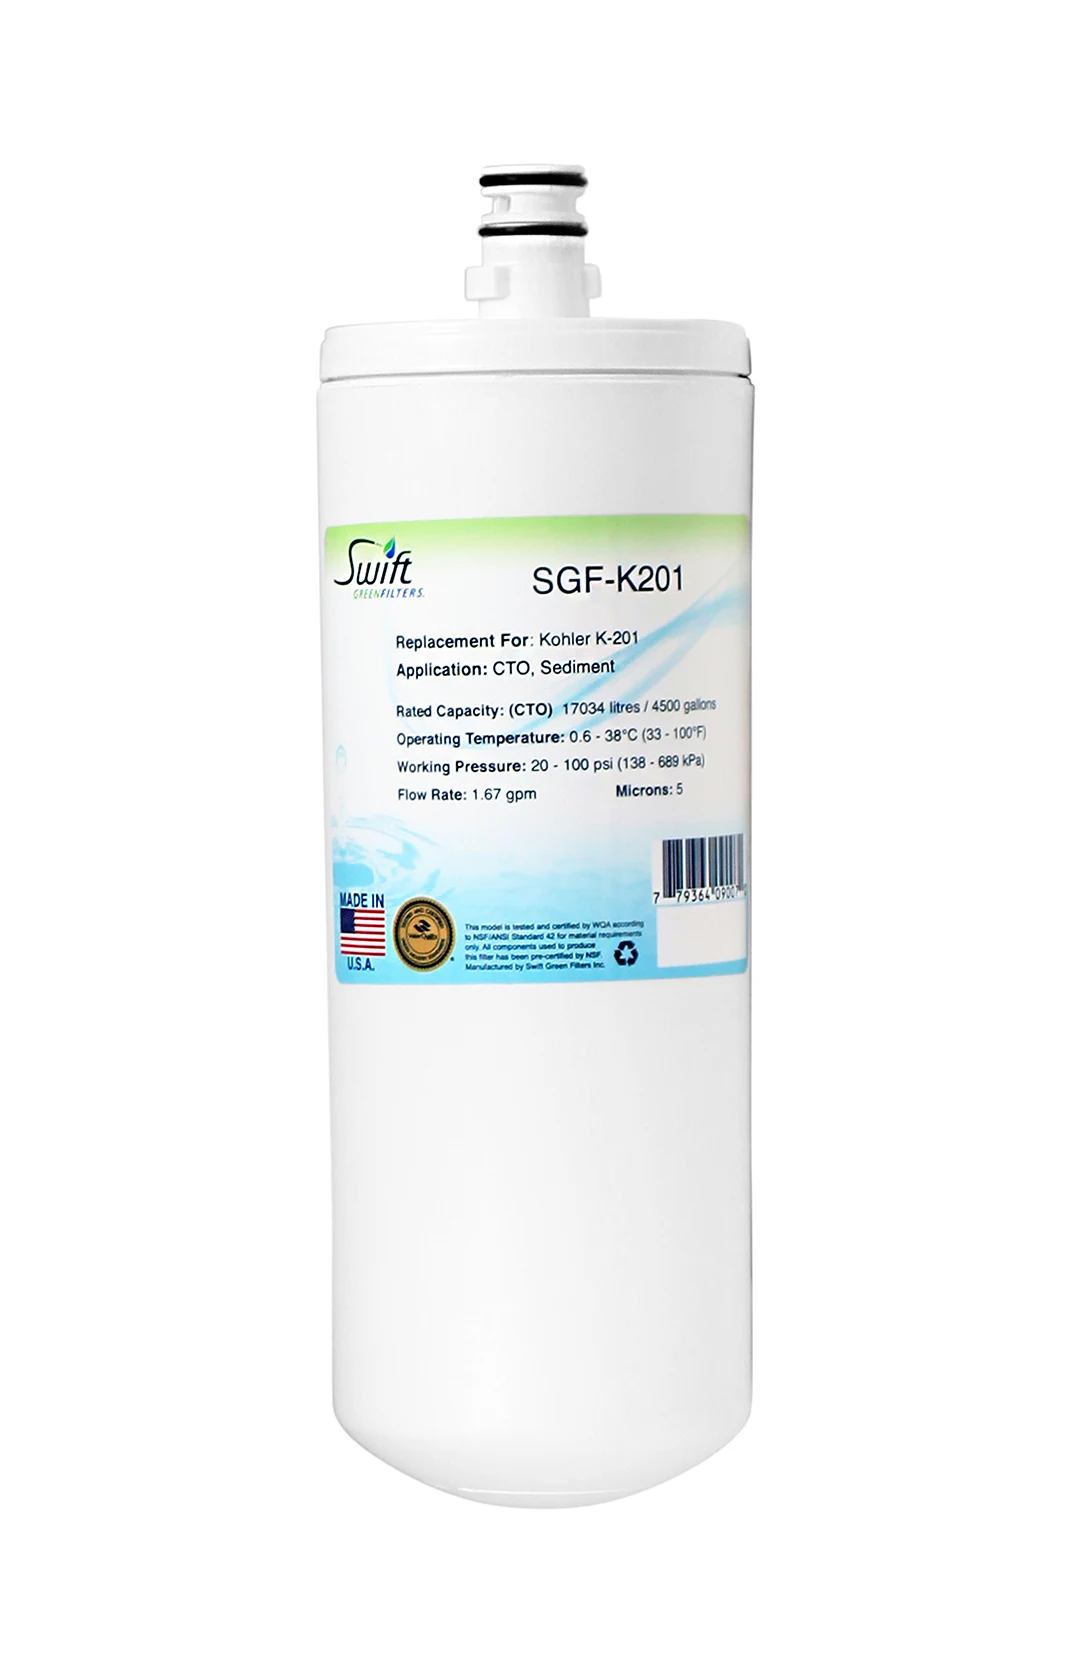 SGF-K201 Replacement Water Filter for Kohler K-201,1 Pack